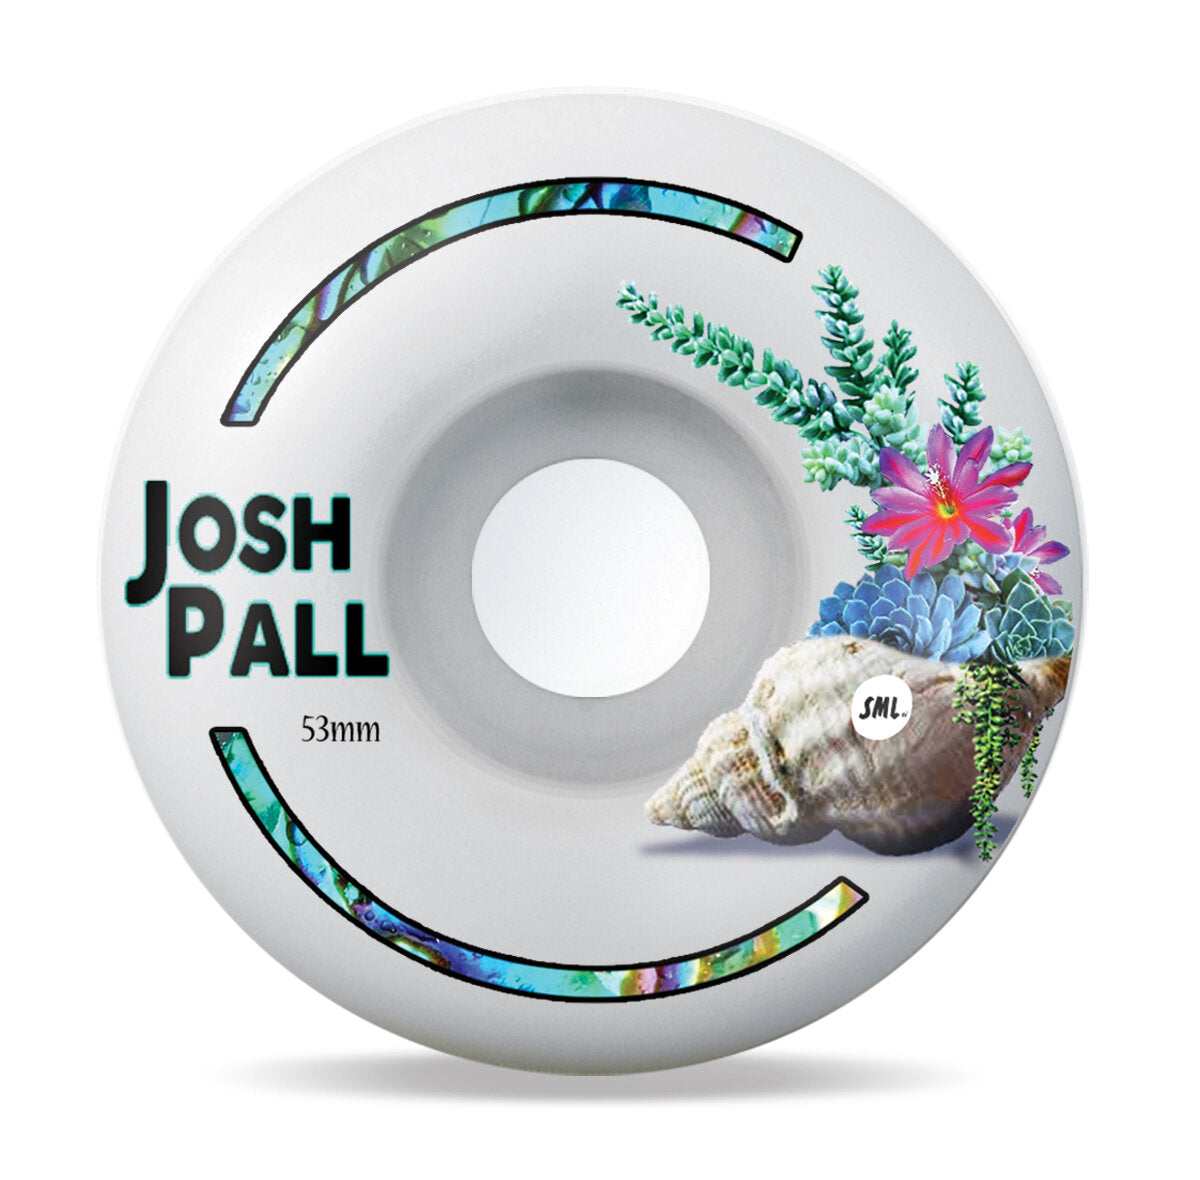 SML WHEELS JOSH PALL "TIDE POOLS" - AG  FORMULA 99A (53MM) - The Drive Skateshop